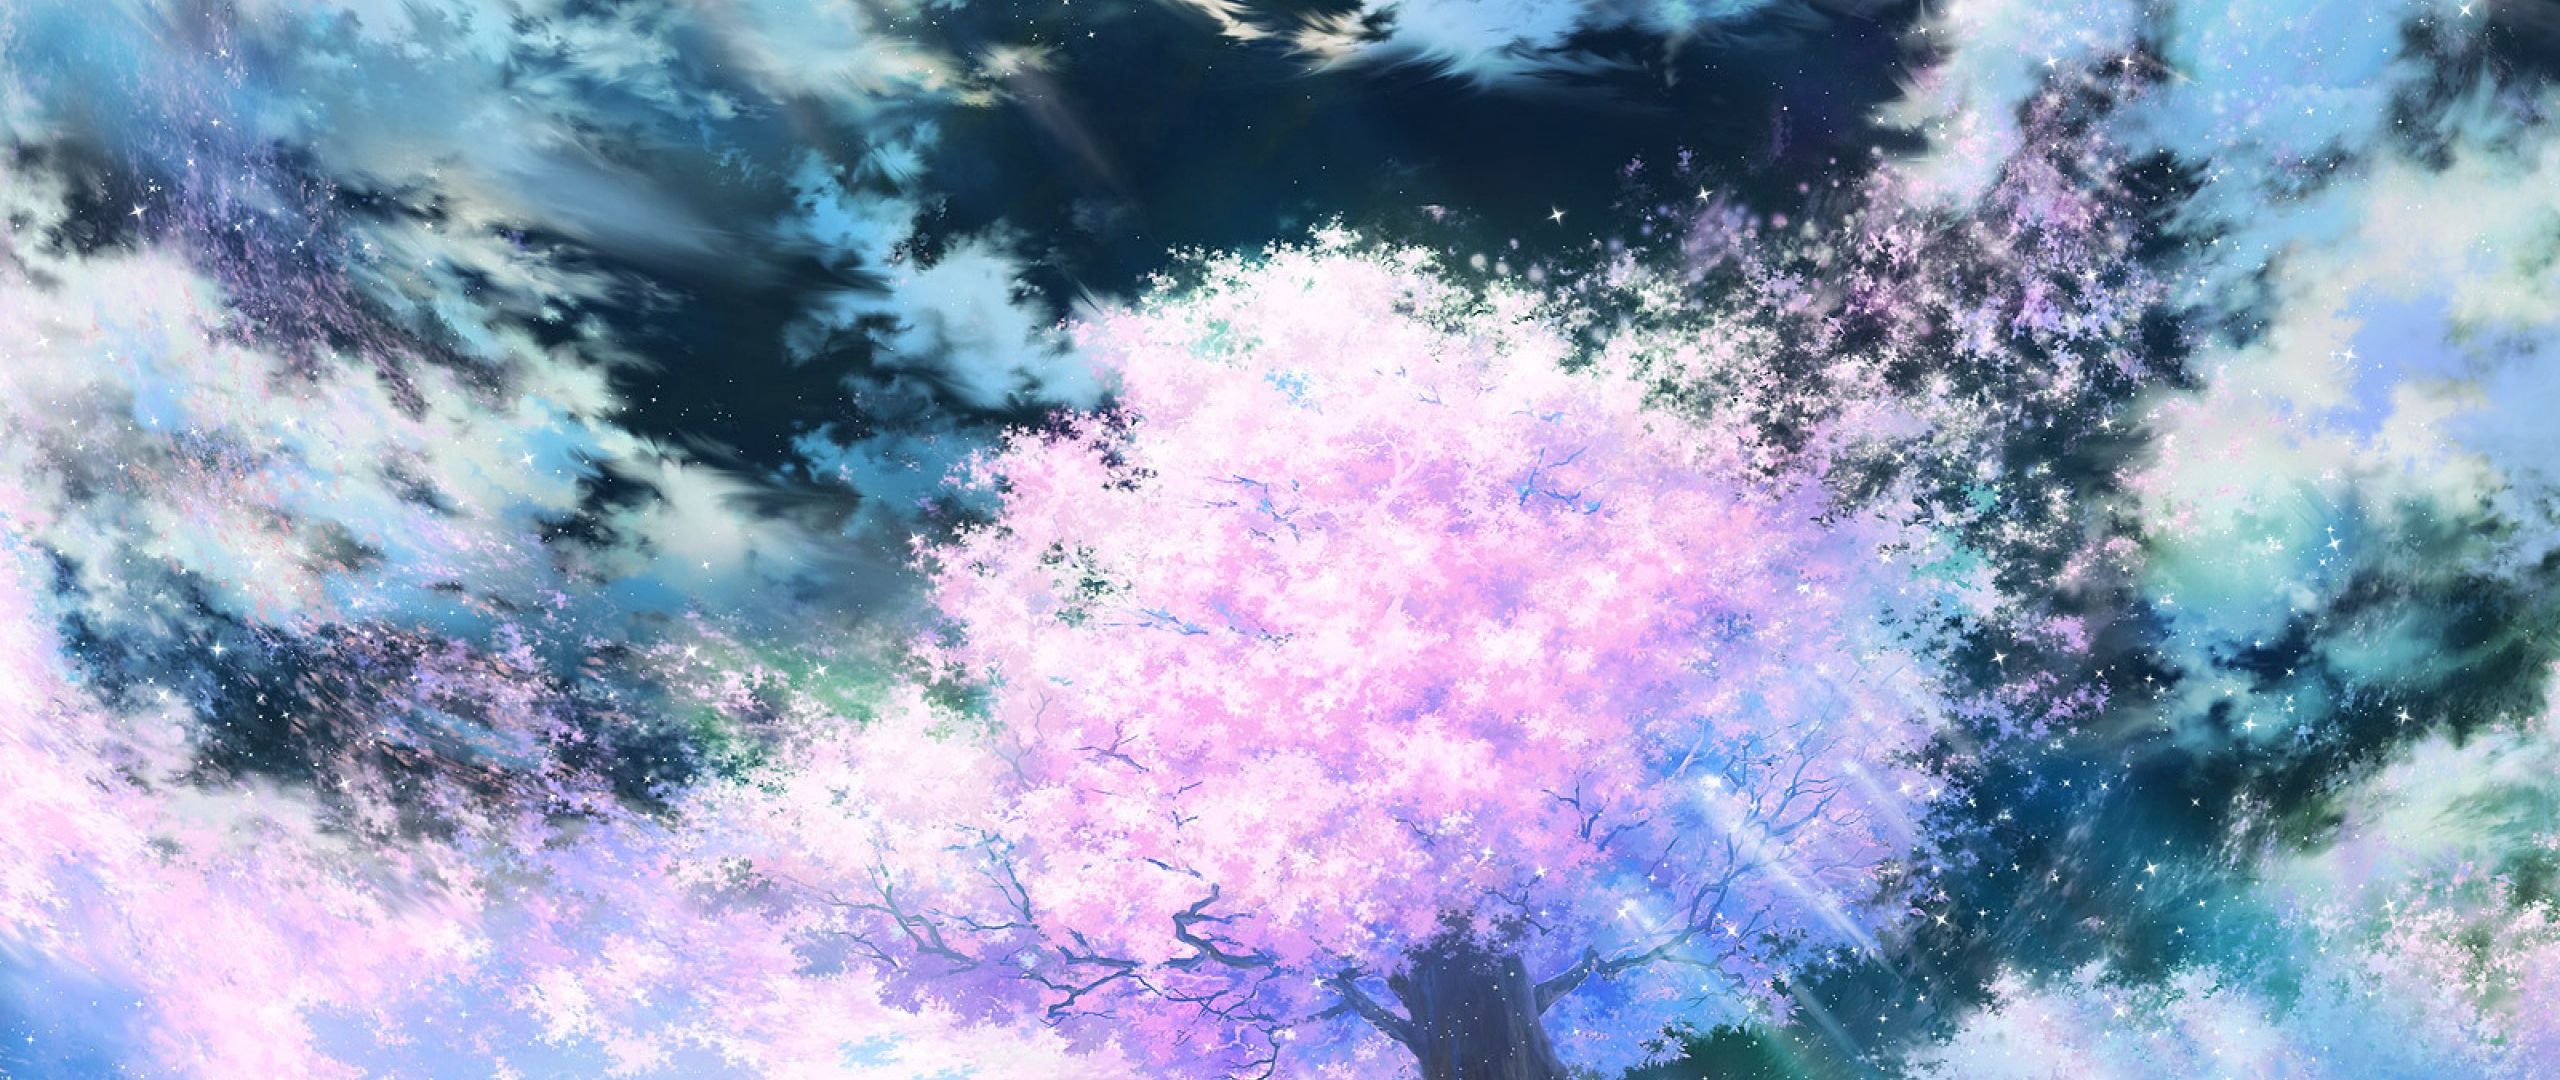 Download wallpaper 2560x1080 sakura, art, sky, anime, pink dual